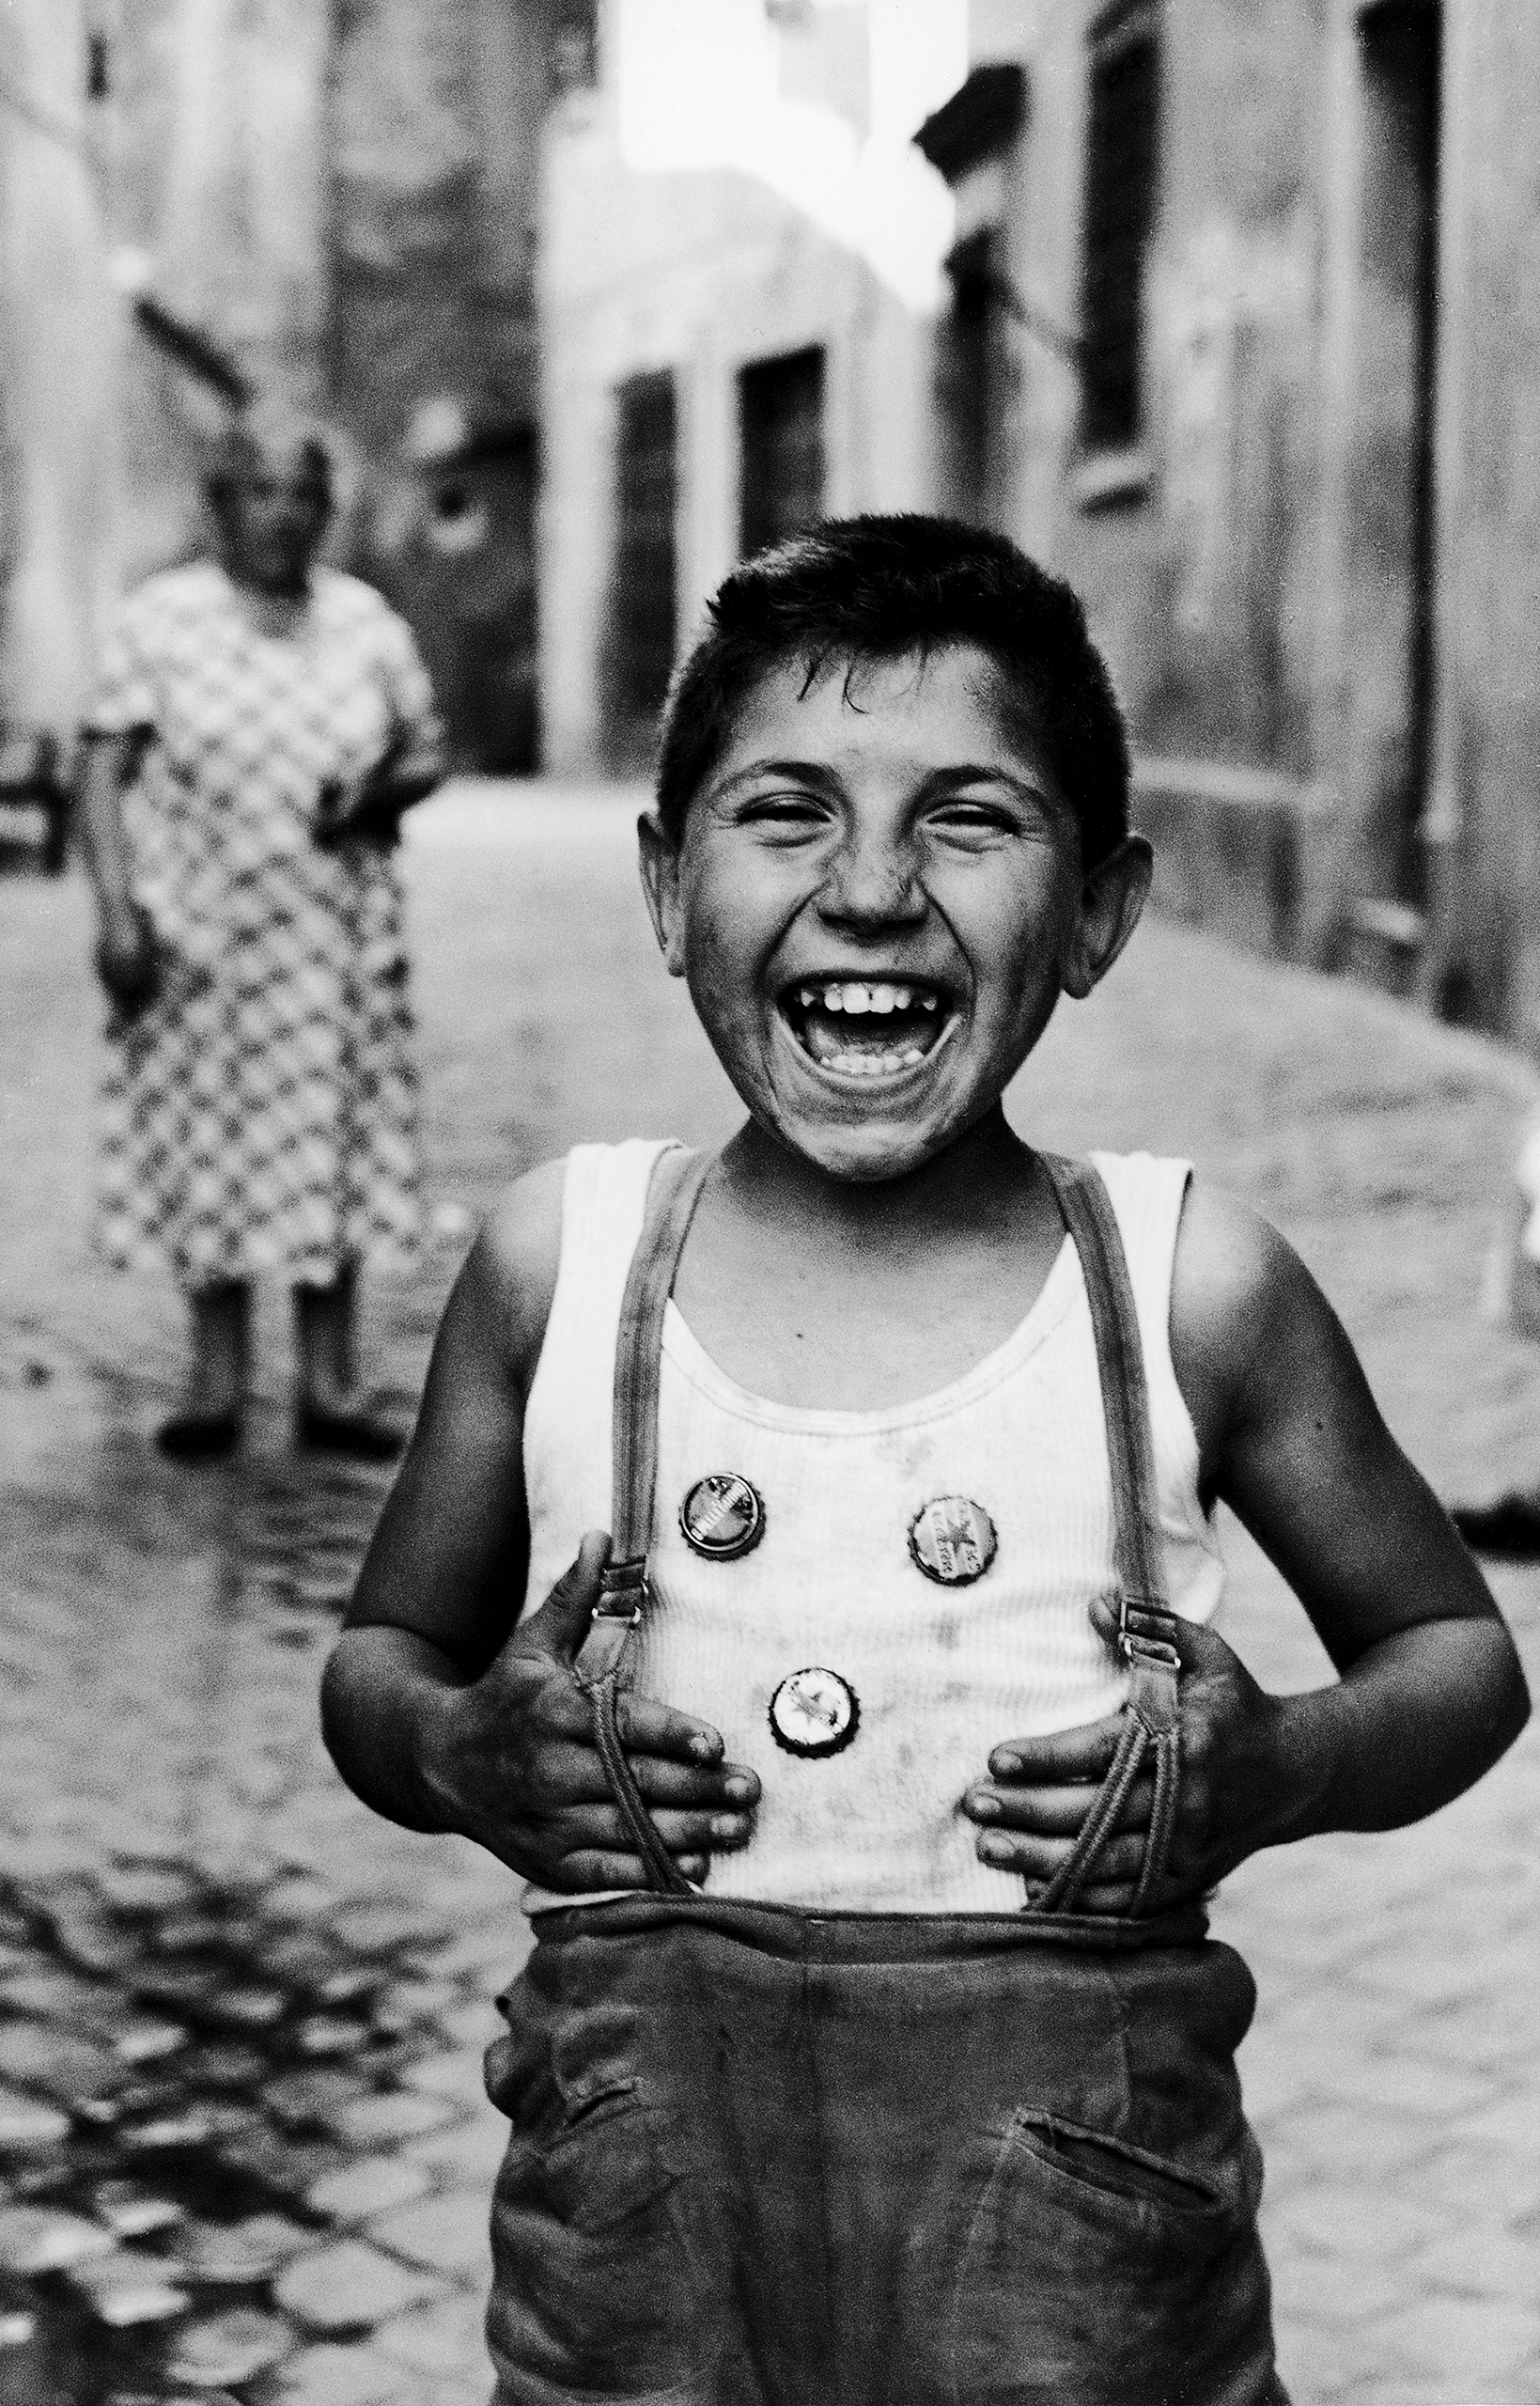 Laughing boy on street in Trastevere, Rome, 1958.